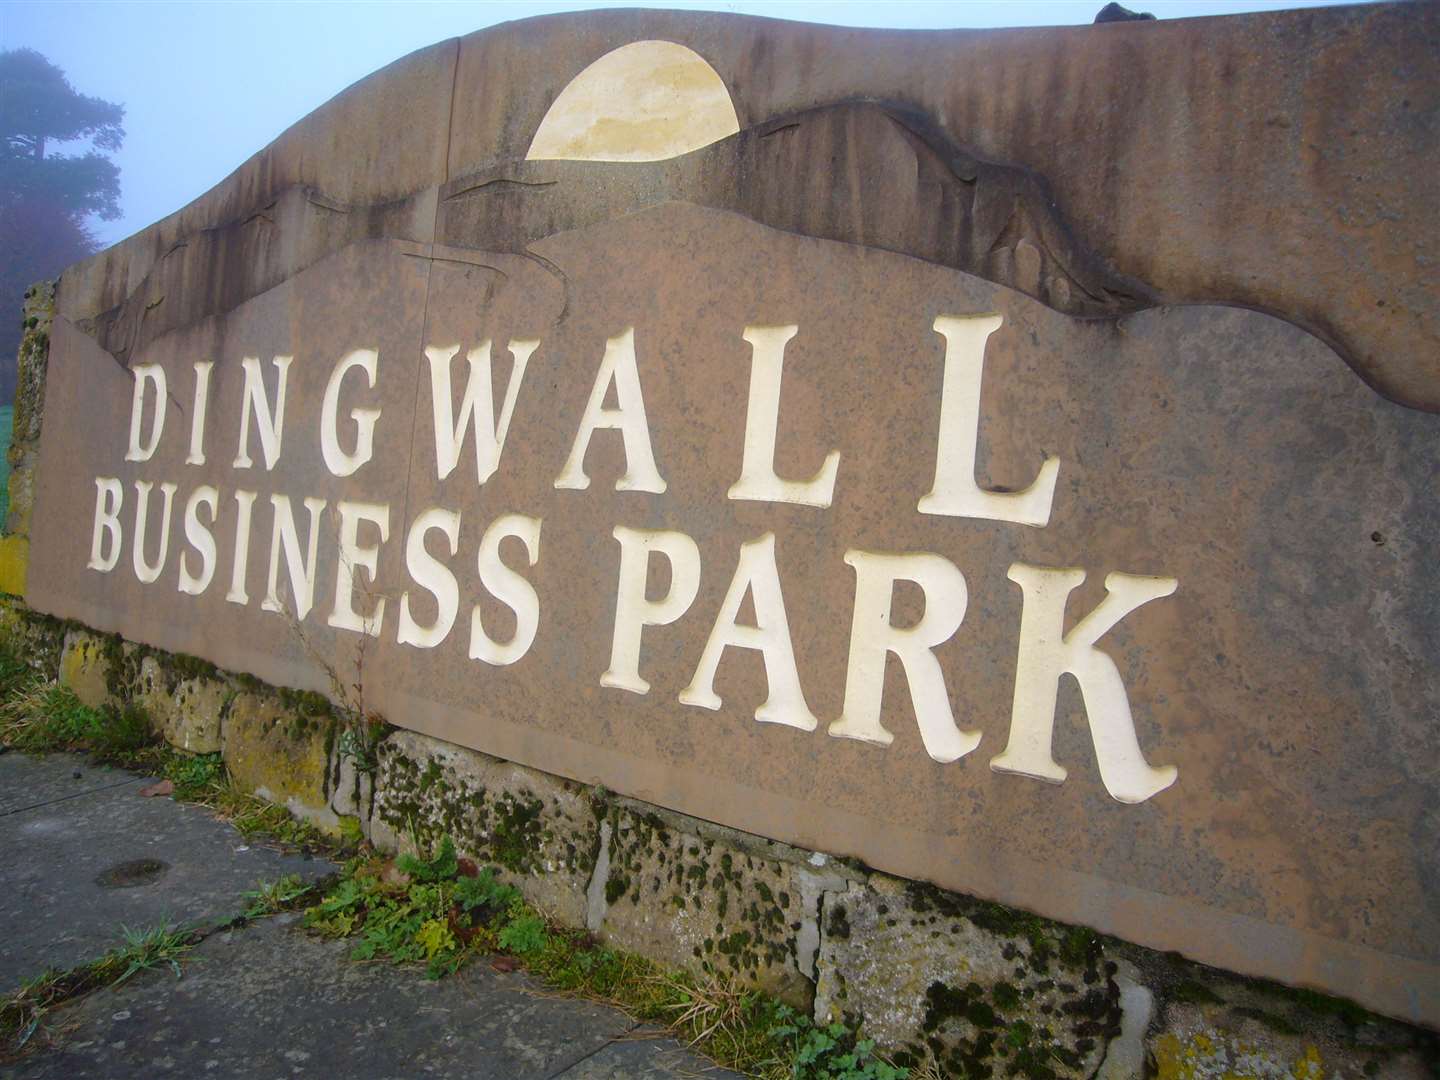 Dingwall Business Park.